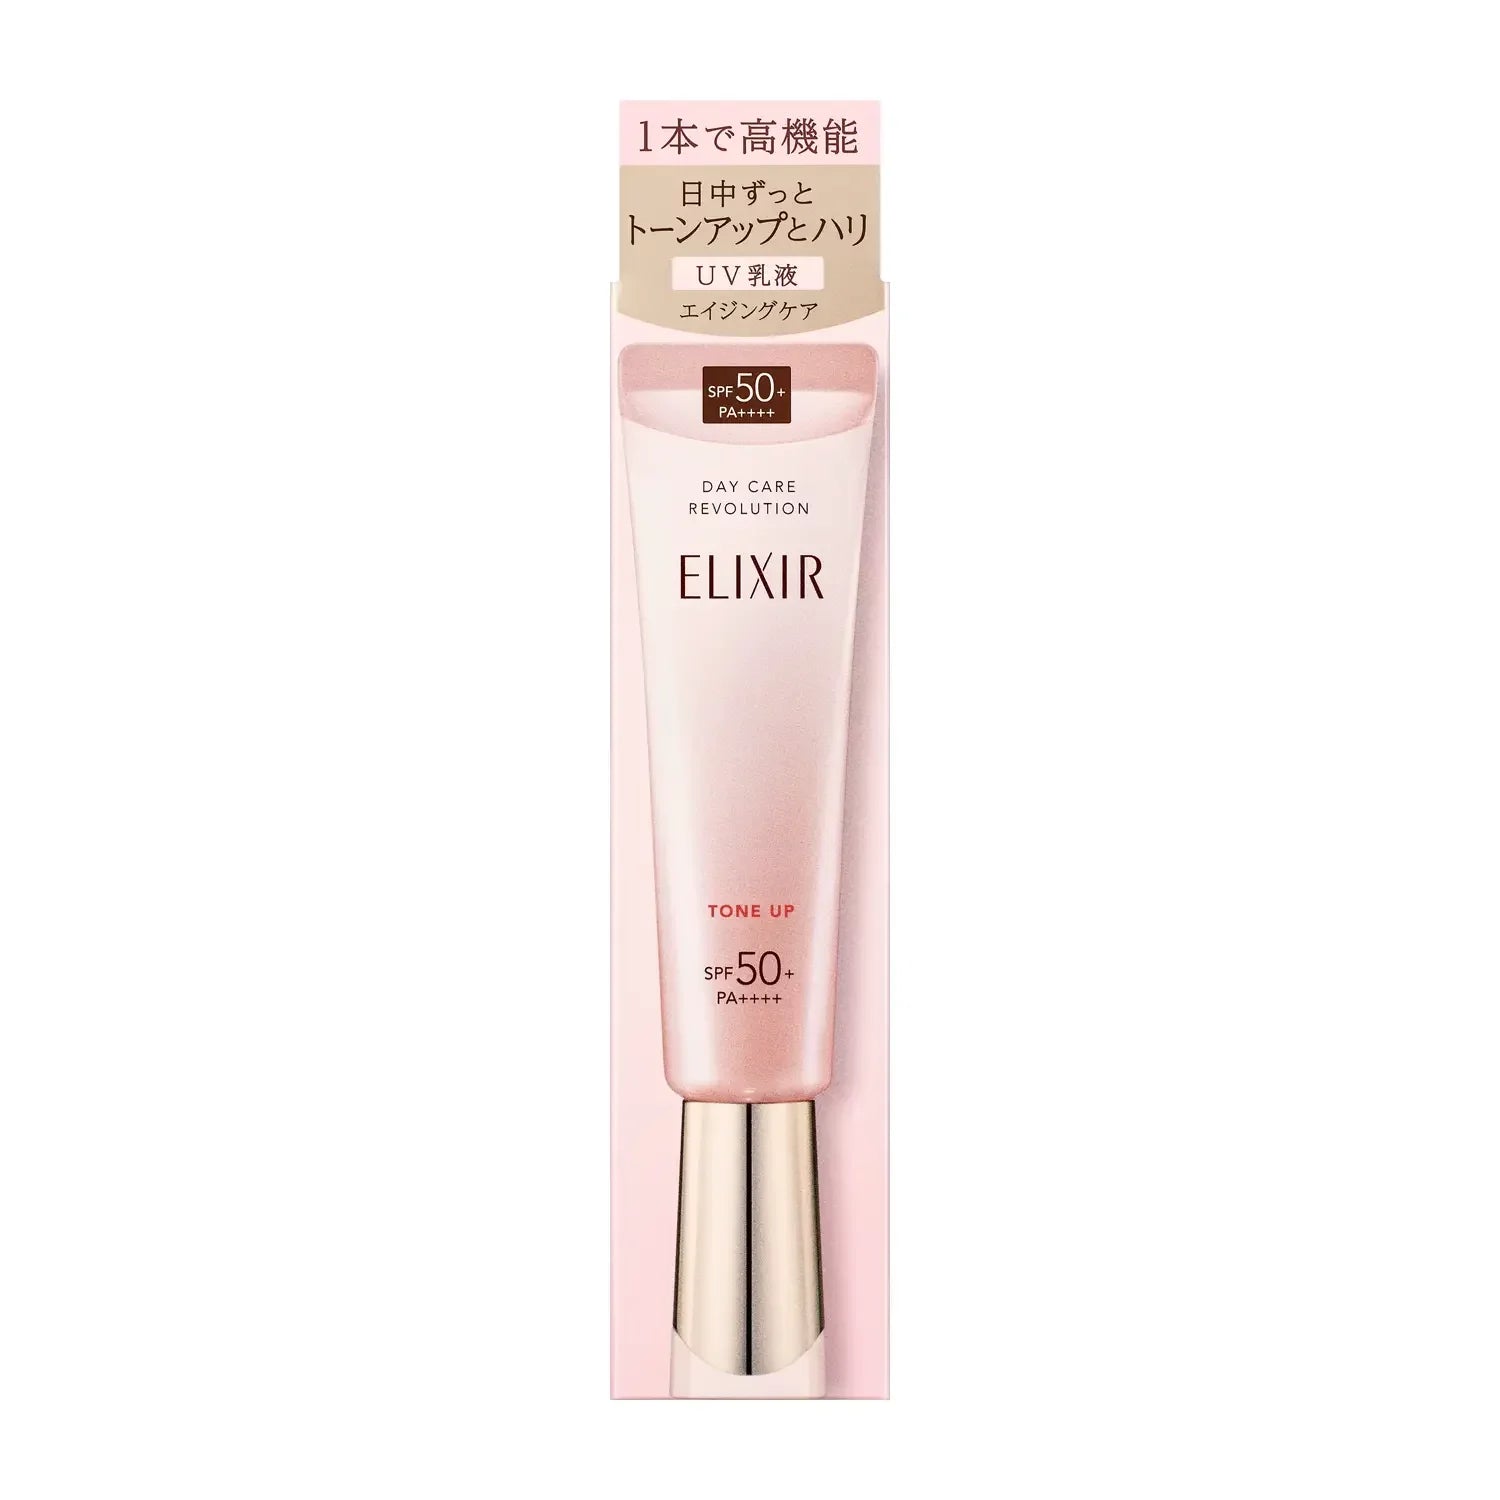 Shiseido Elixir Day Care Multifunctional Tone Up Emulsion Baby Pink SPF 50+ 35g